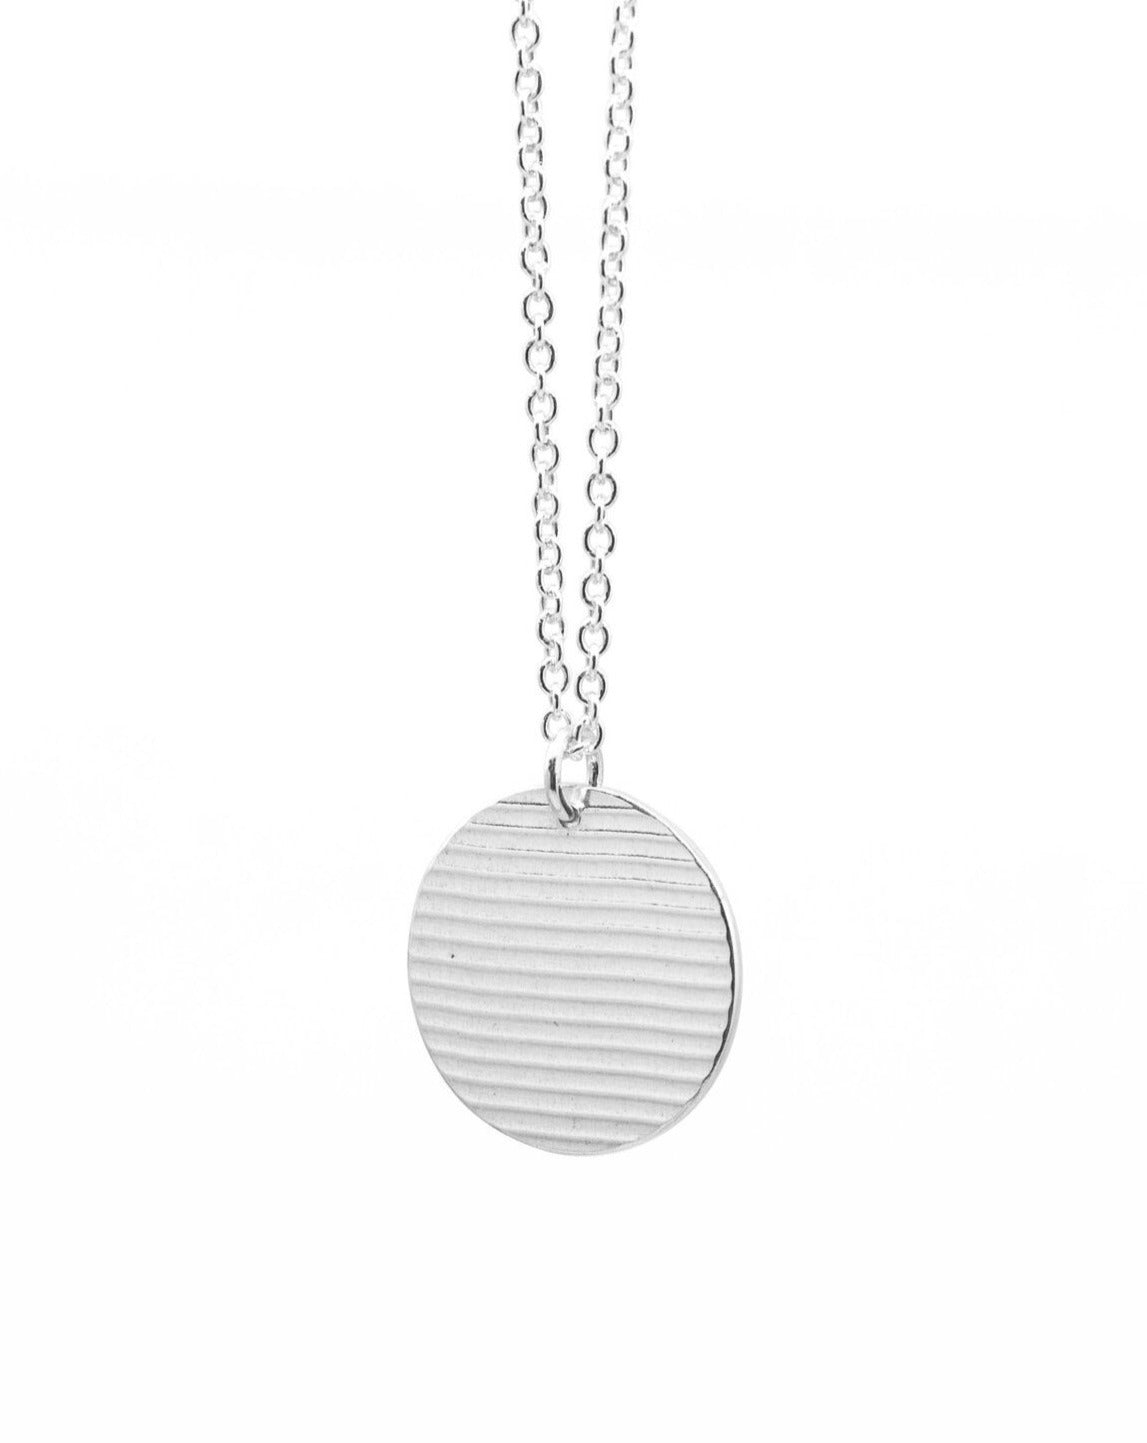 Aurelium Ripple Necklace - Silver